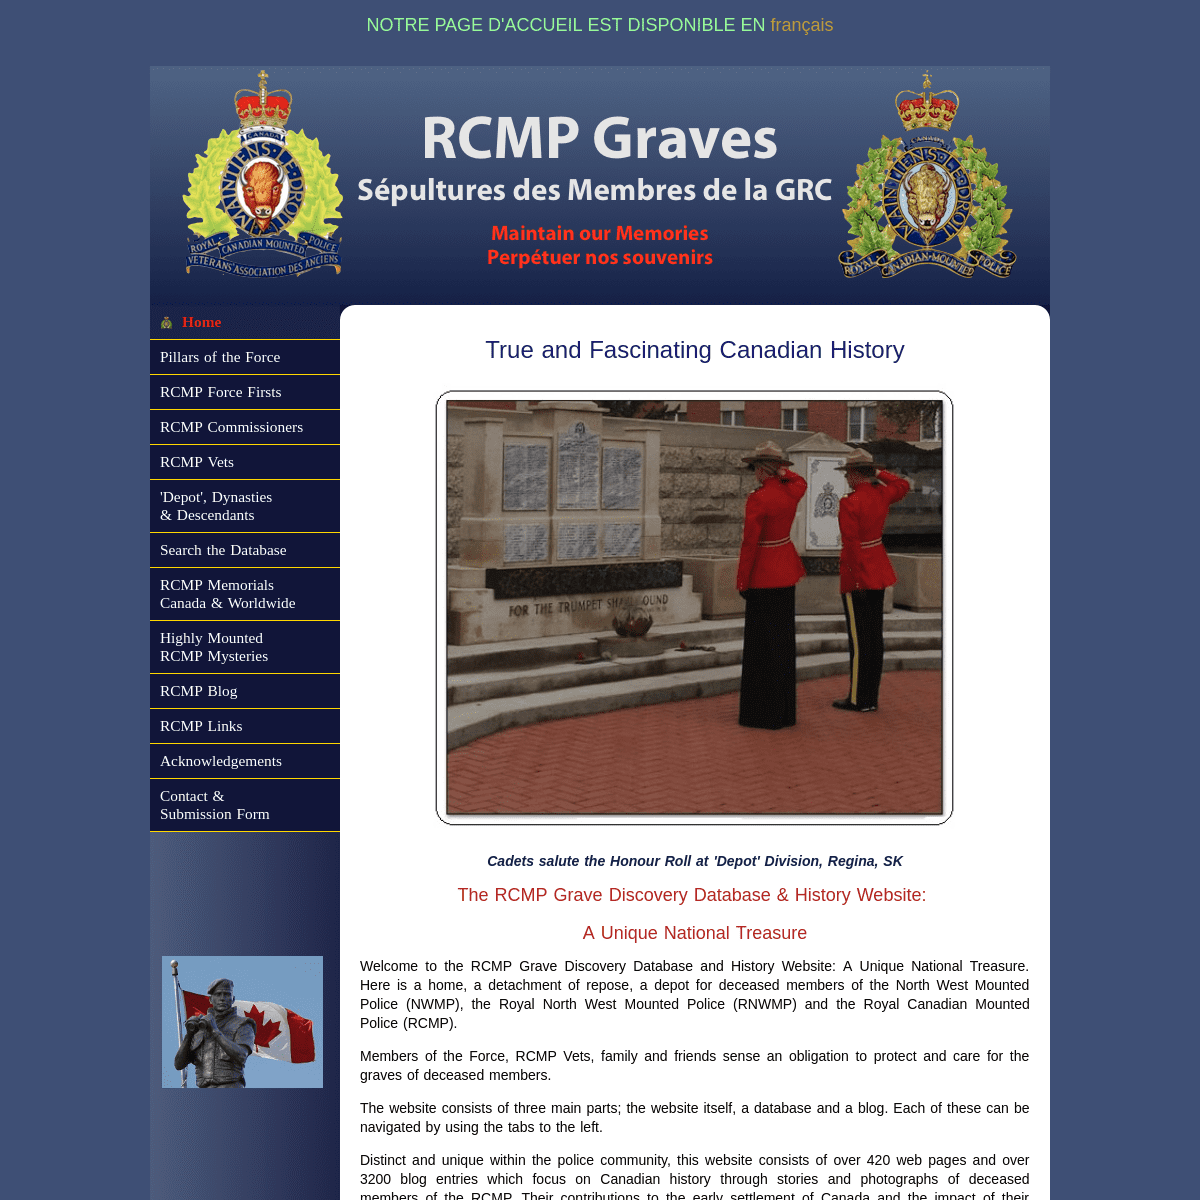 National RCMP Graves Website & Database